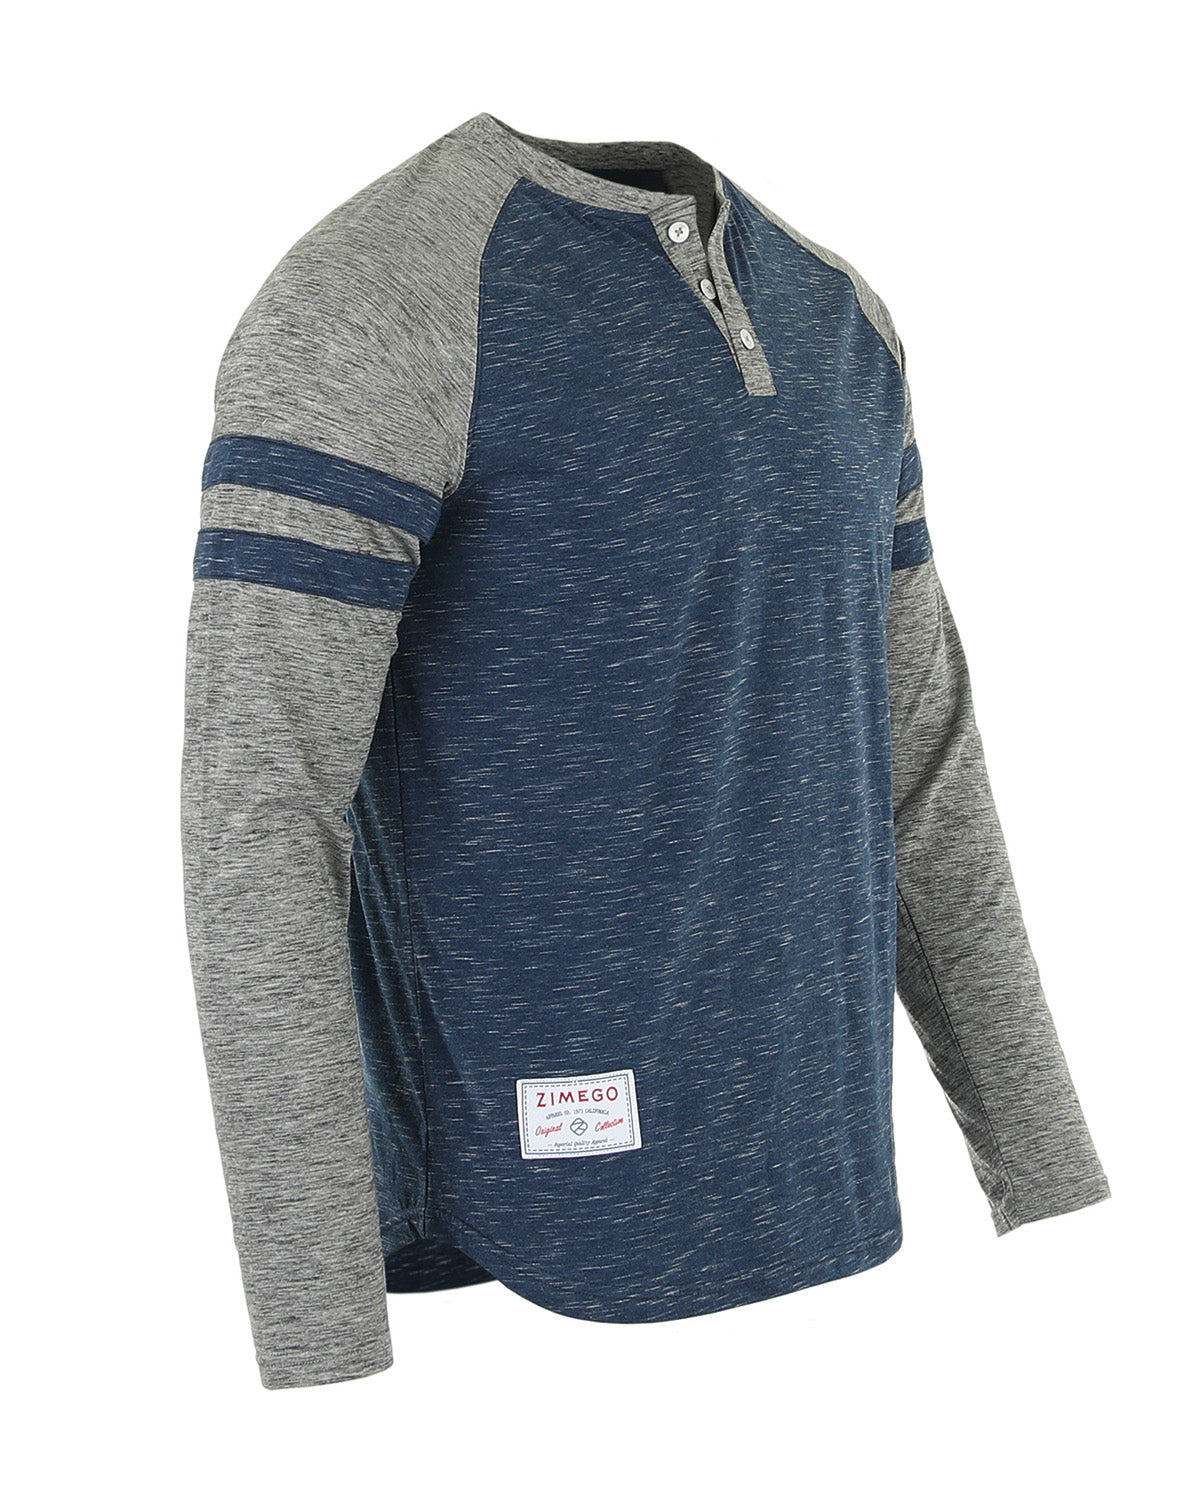 Men’s Casual Long Sleeve Baseball Raglan Shirt - Team Spirit Store USA 